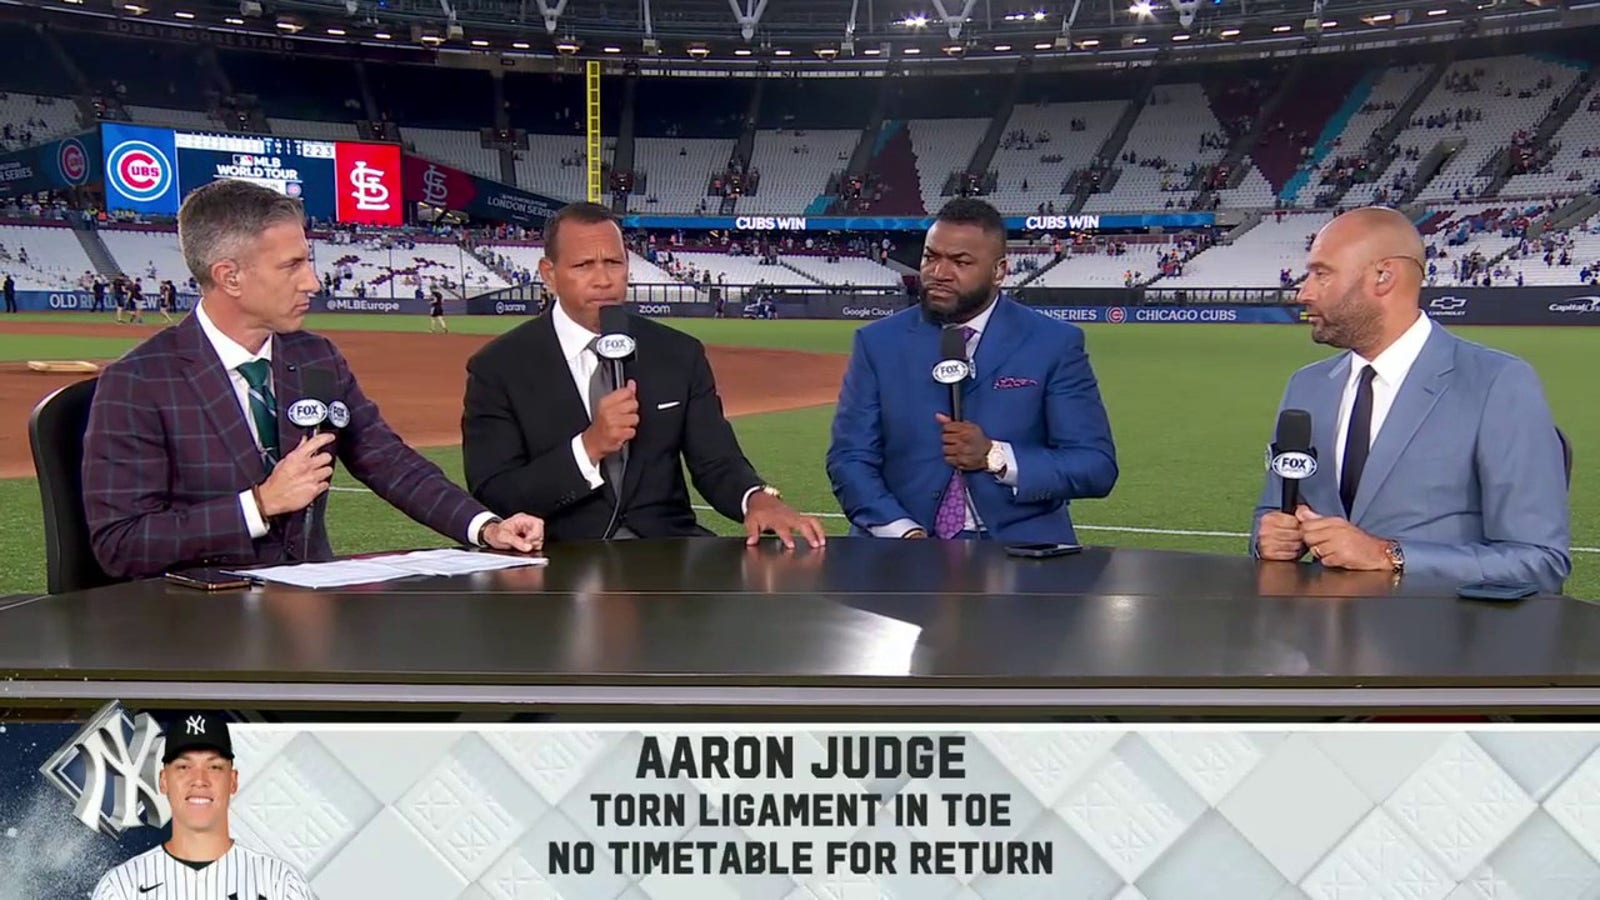 Yankees: SF Giants announcer questions recent Aaron Judge report